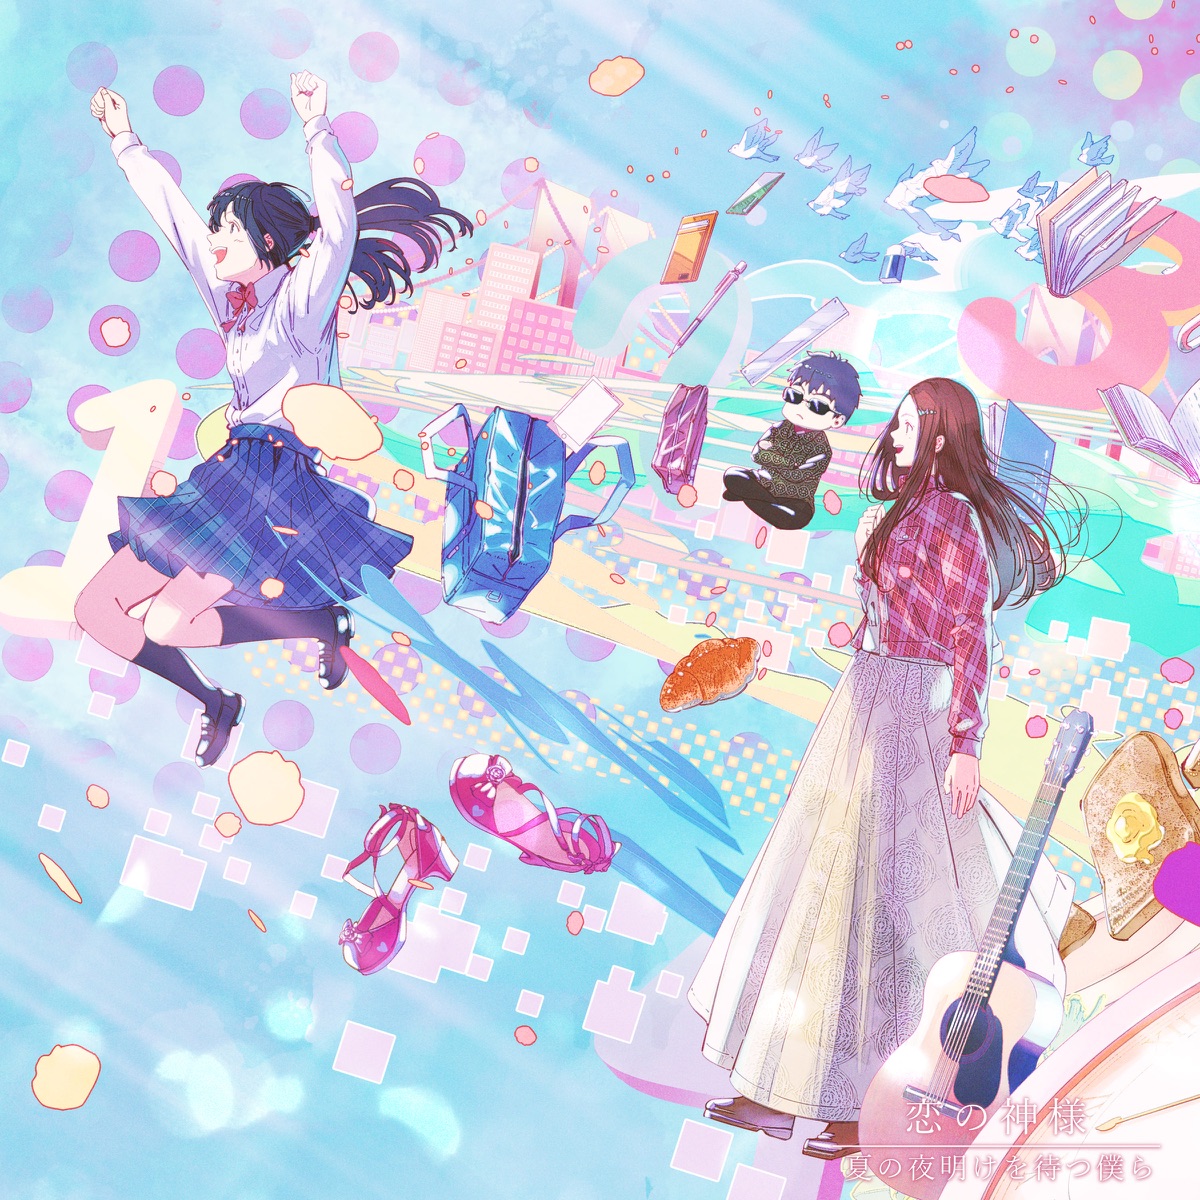 Cover art for『*Luna×Oto Hatsuki - 恋の神様 feat. くろくも, ねんね, NORISTRY』from the release『Koi no Kamisama feat. kurokumo, Nenne, NORISTRY